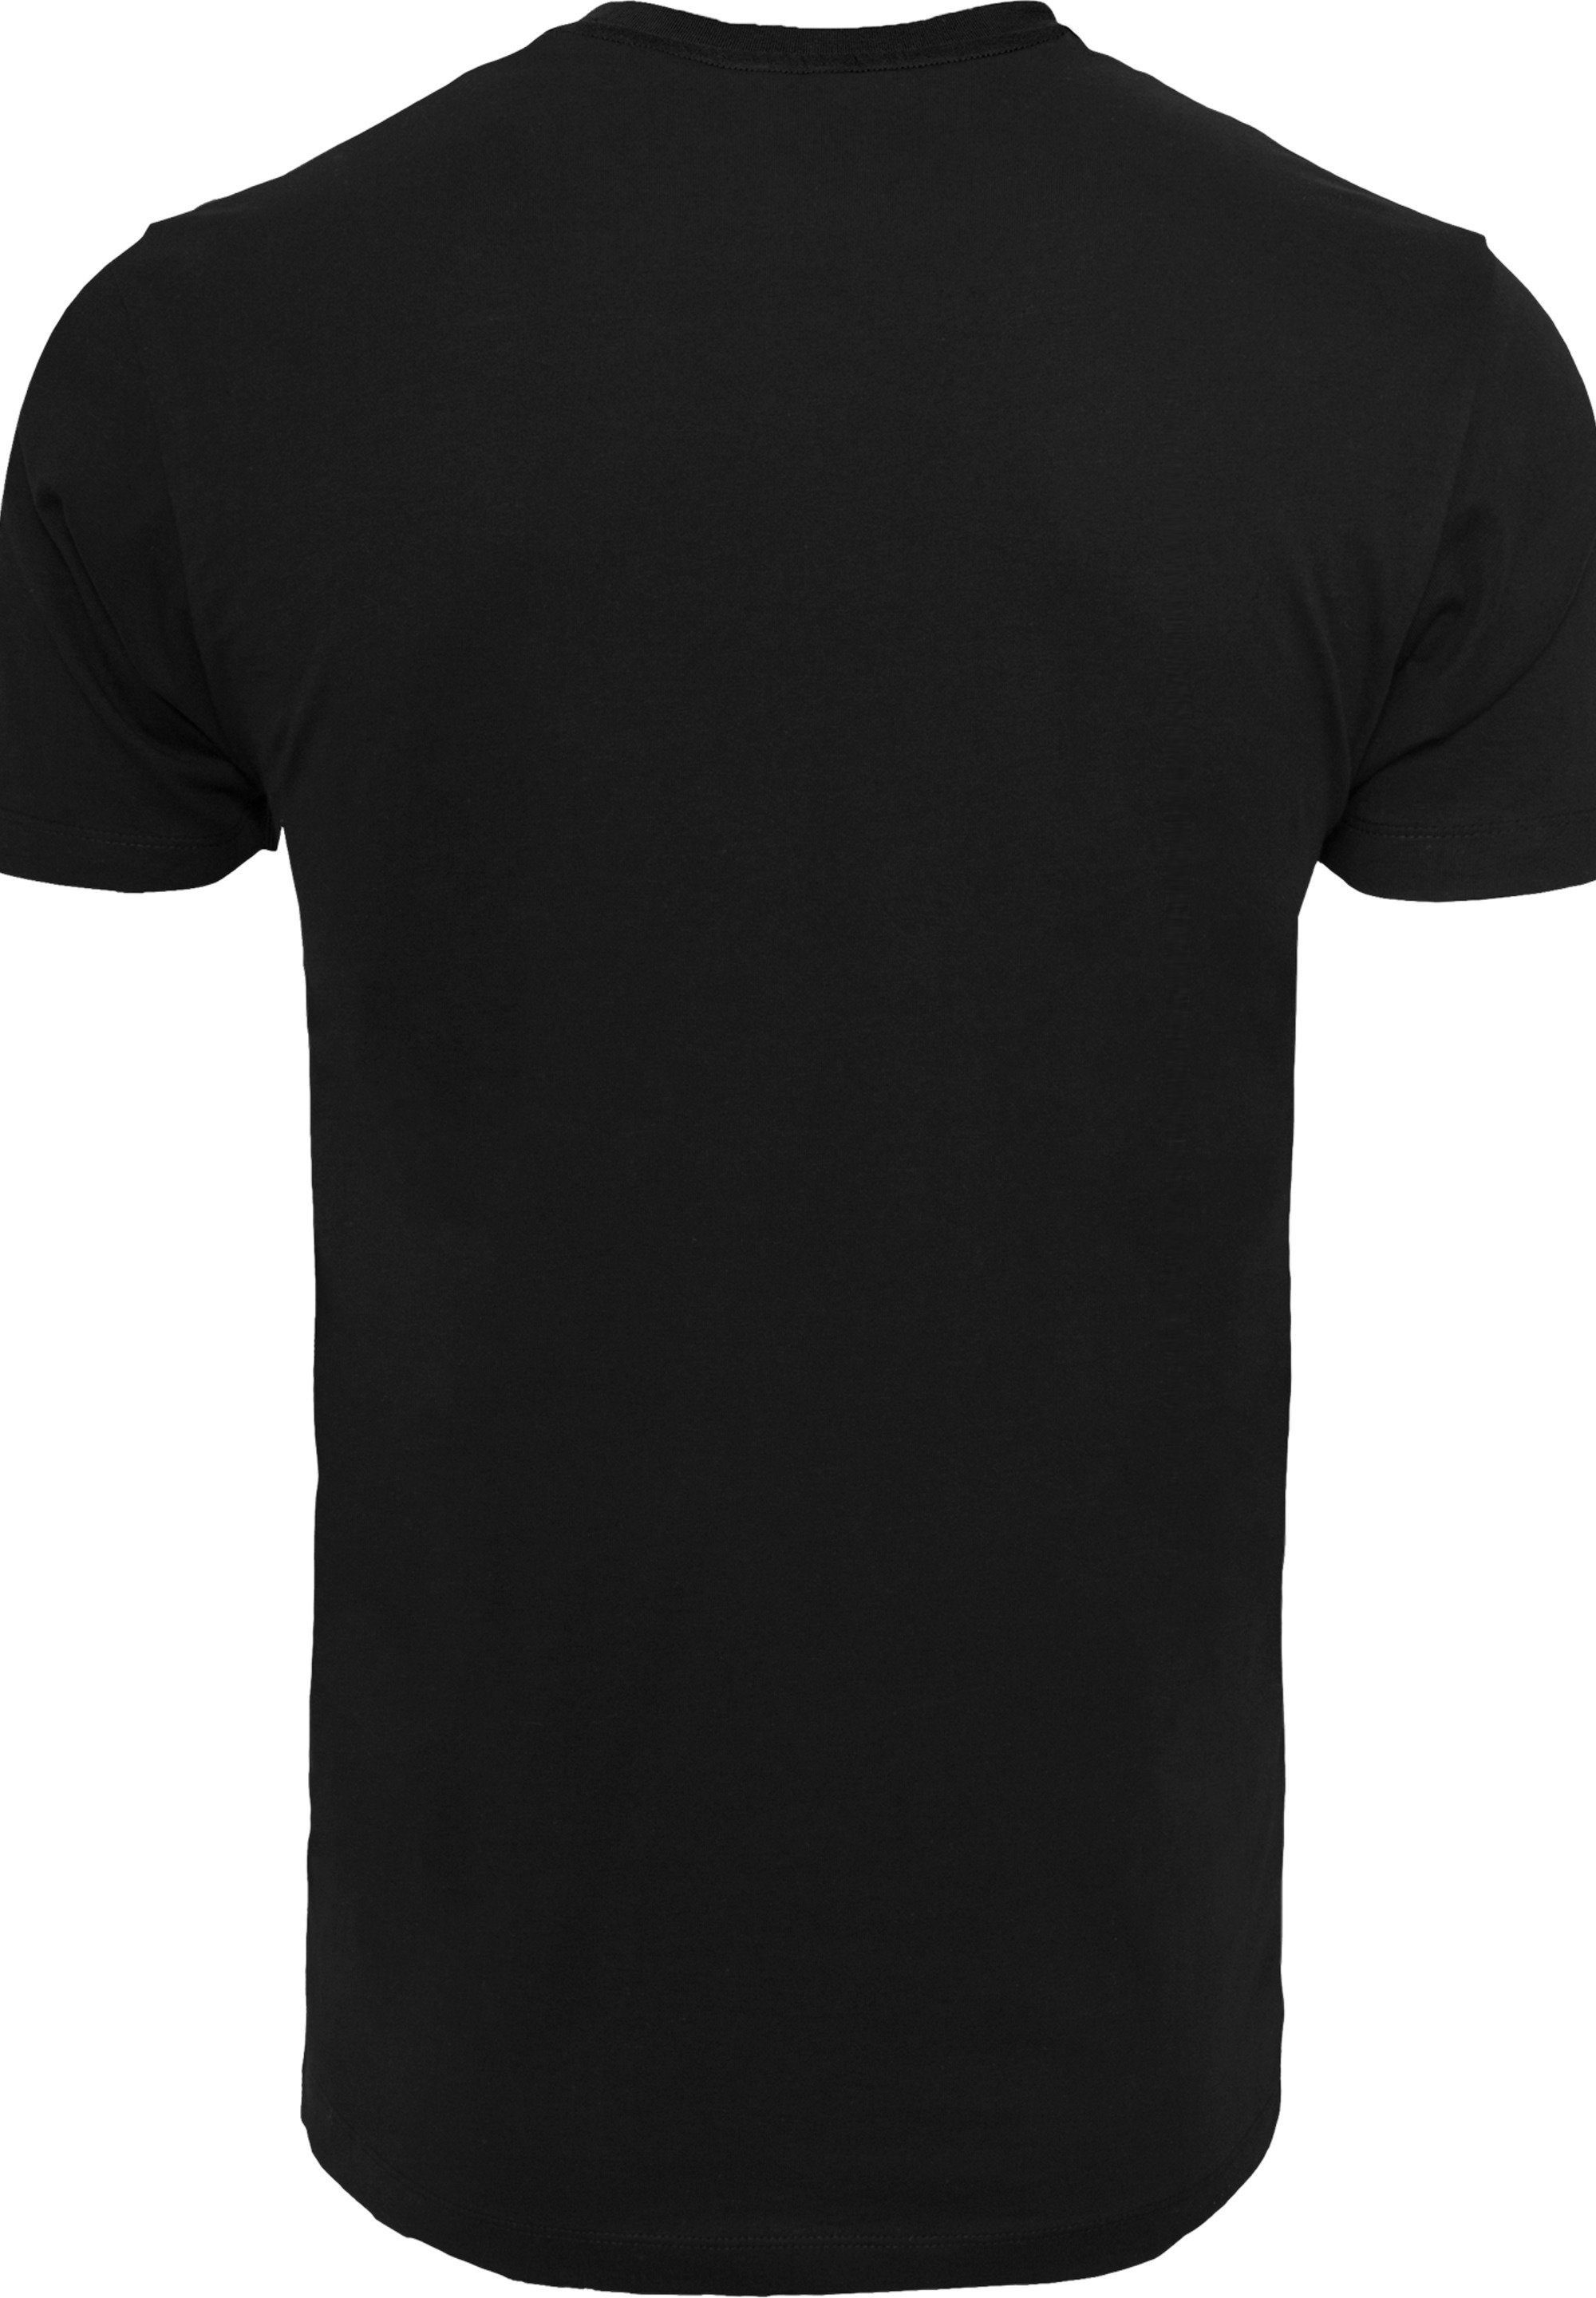 F4NT4STIC T-Shirt NASA Merch,Regular-Fit,Basic,Bedruckt Planet Earth Herren,Premium